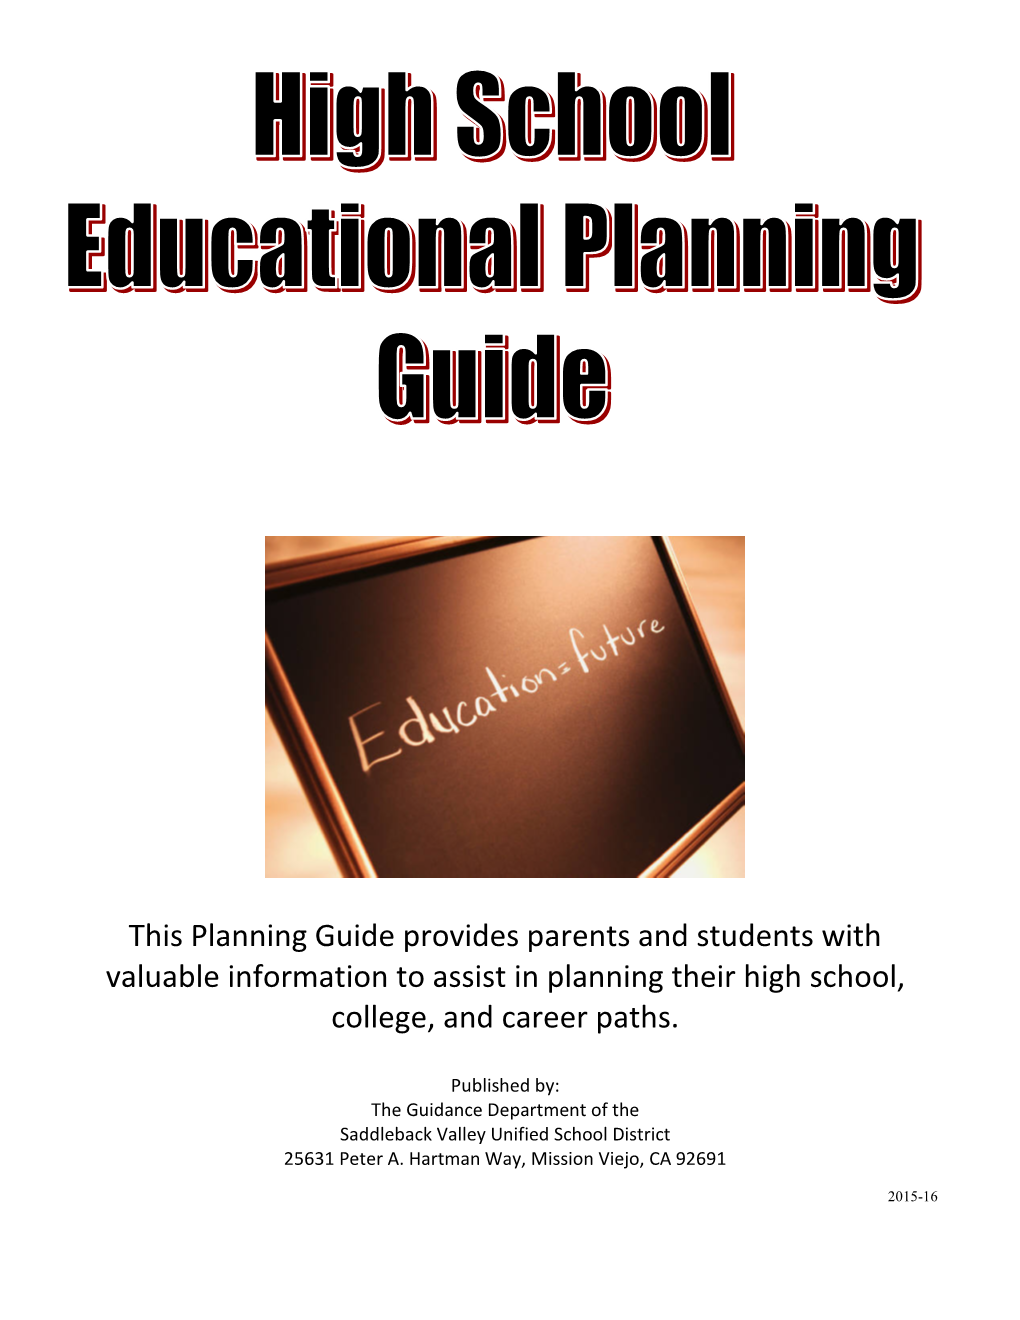 SVUSD High School Planning Guide